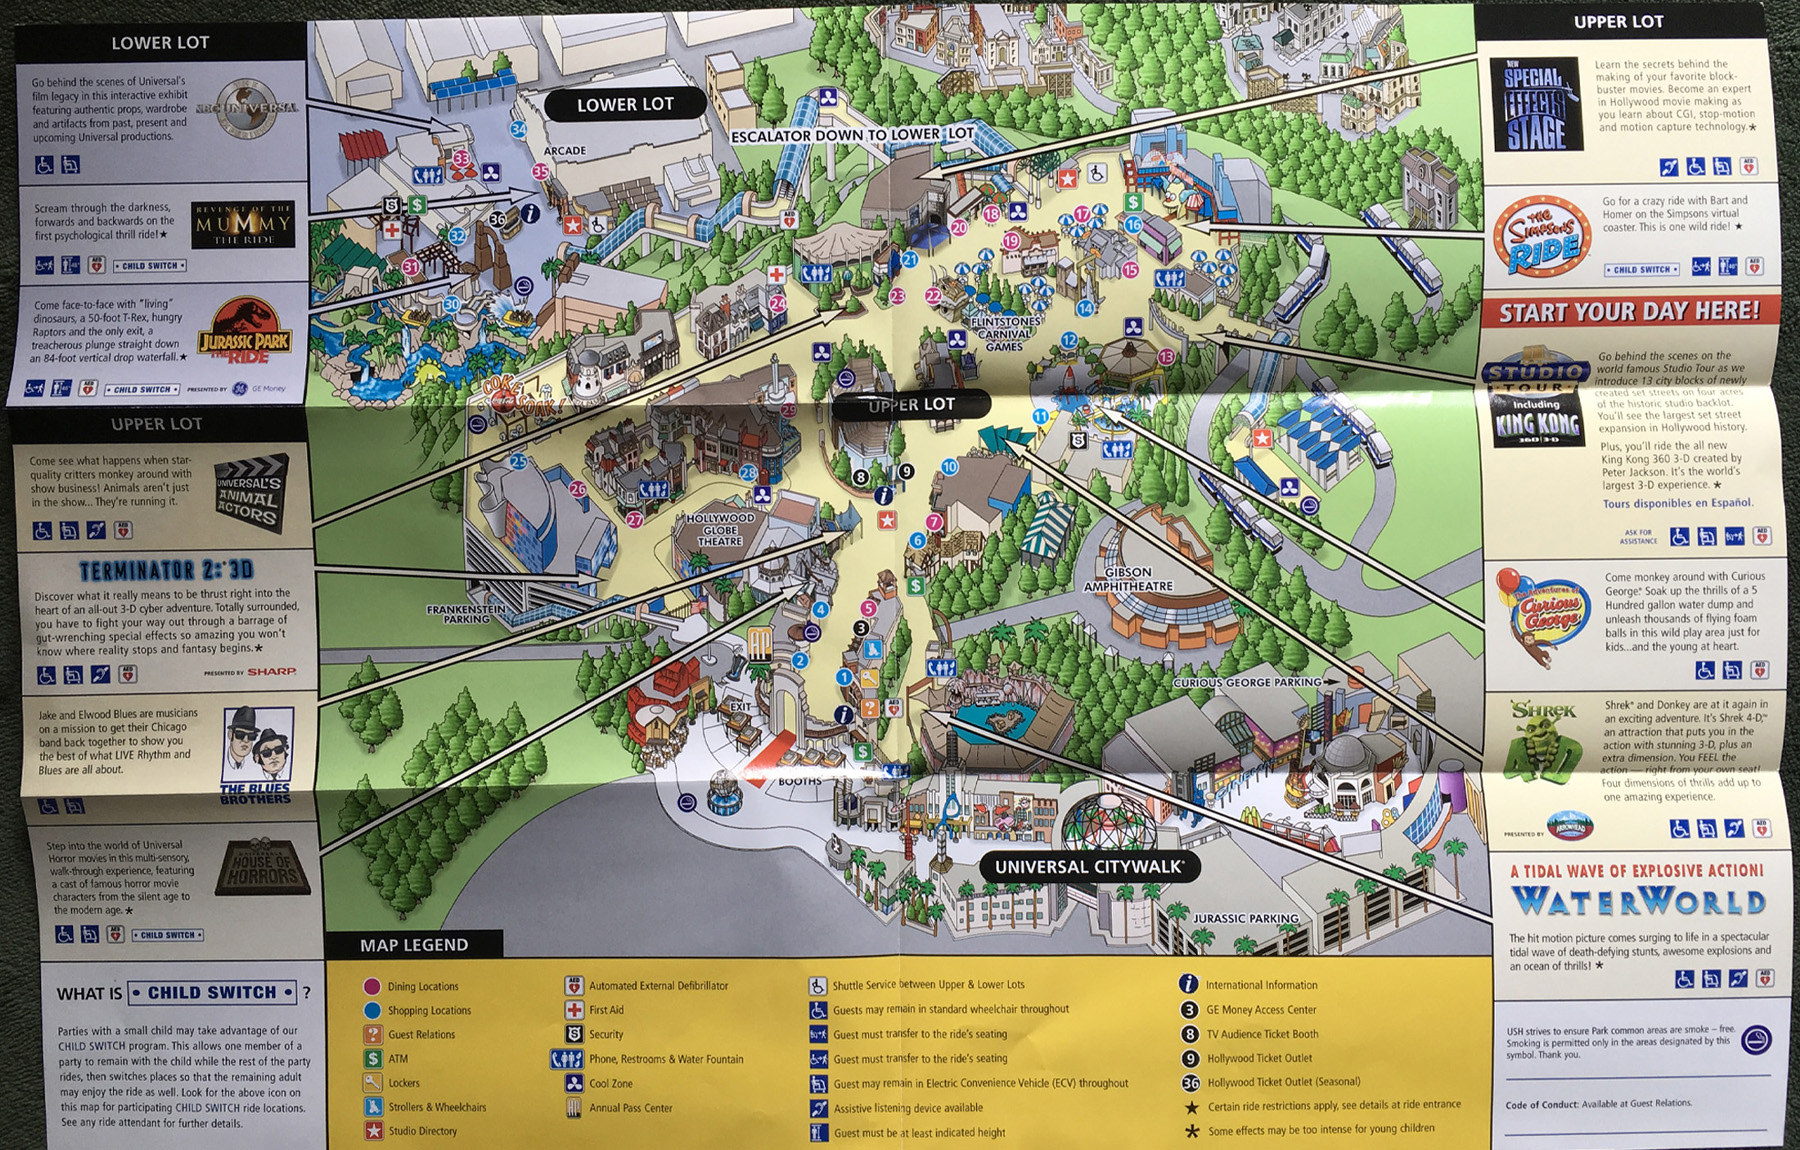 2010 Universal Studios Hollywood Map